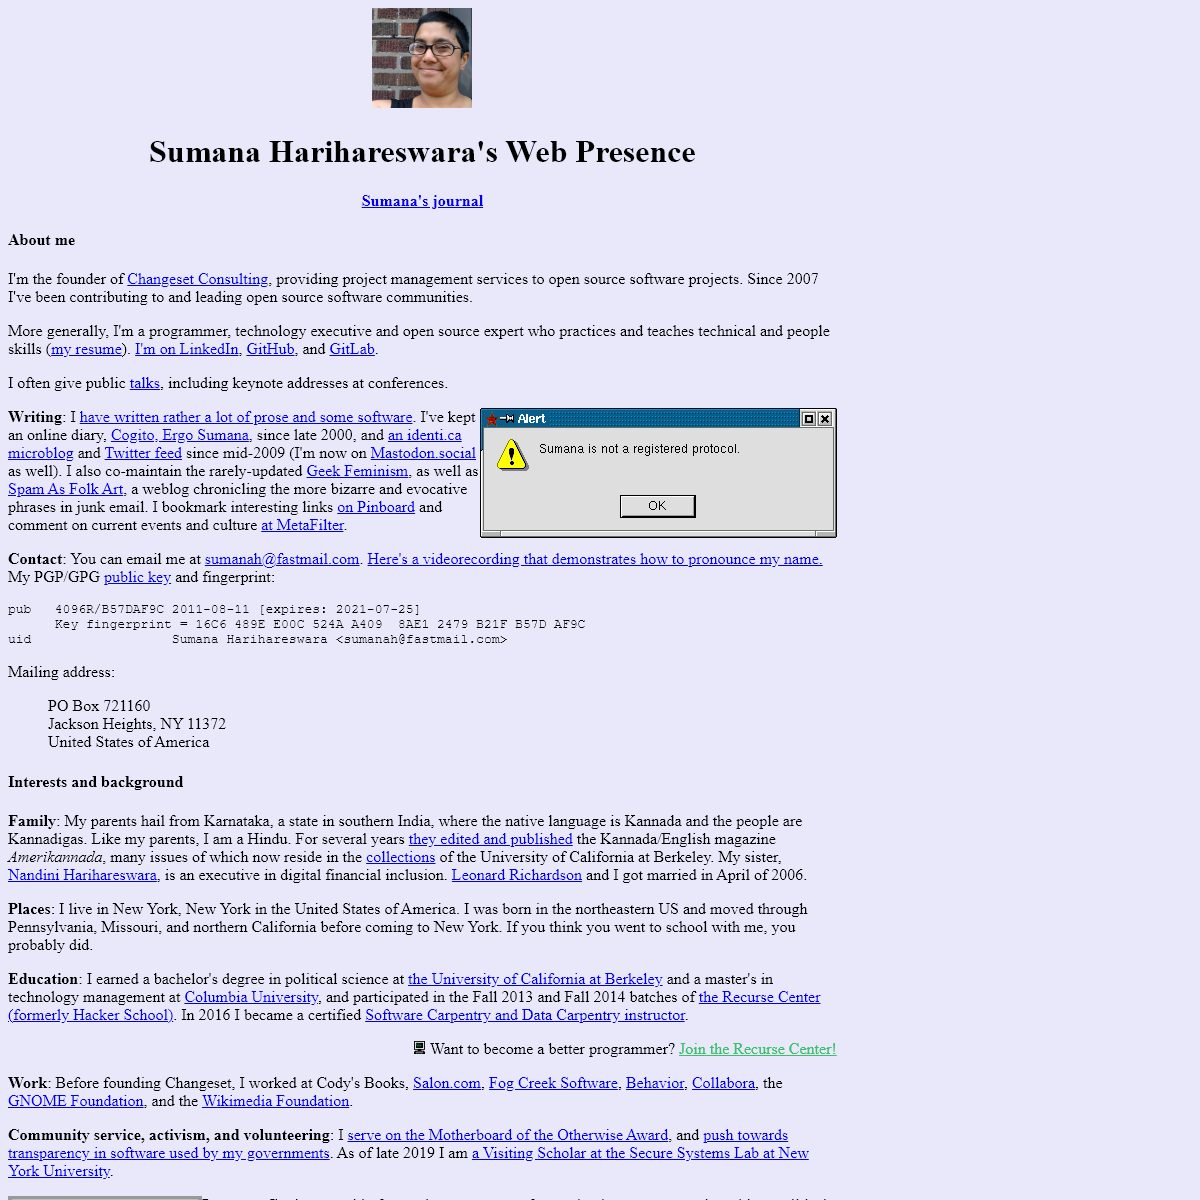 A complete backup of harihareswara.net